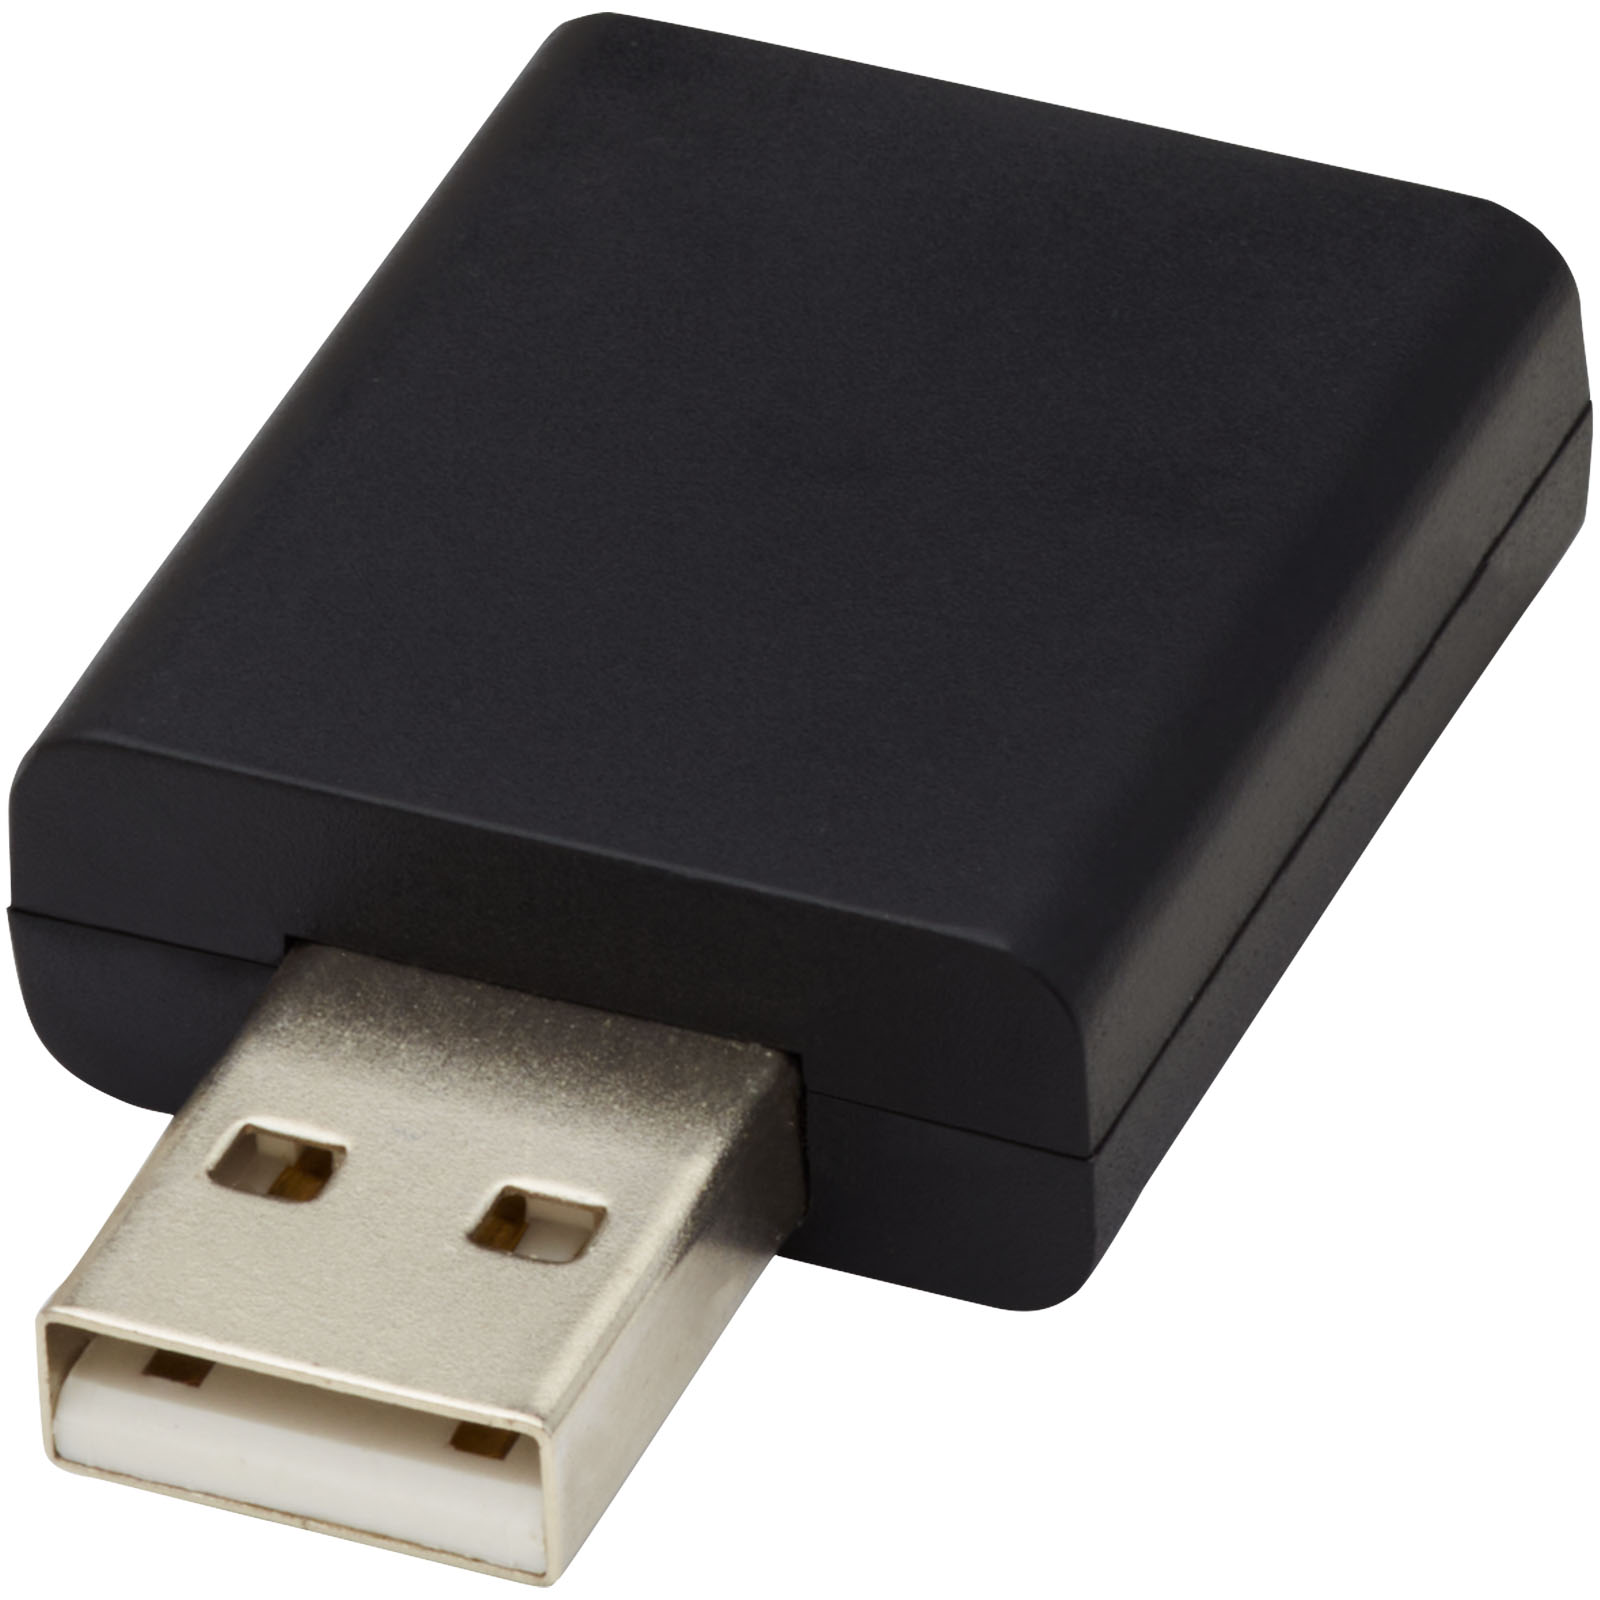 Technology - Incognito USB data blocker